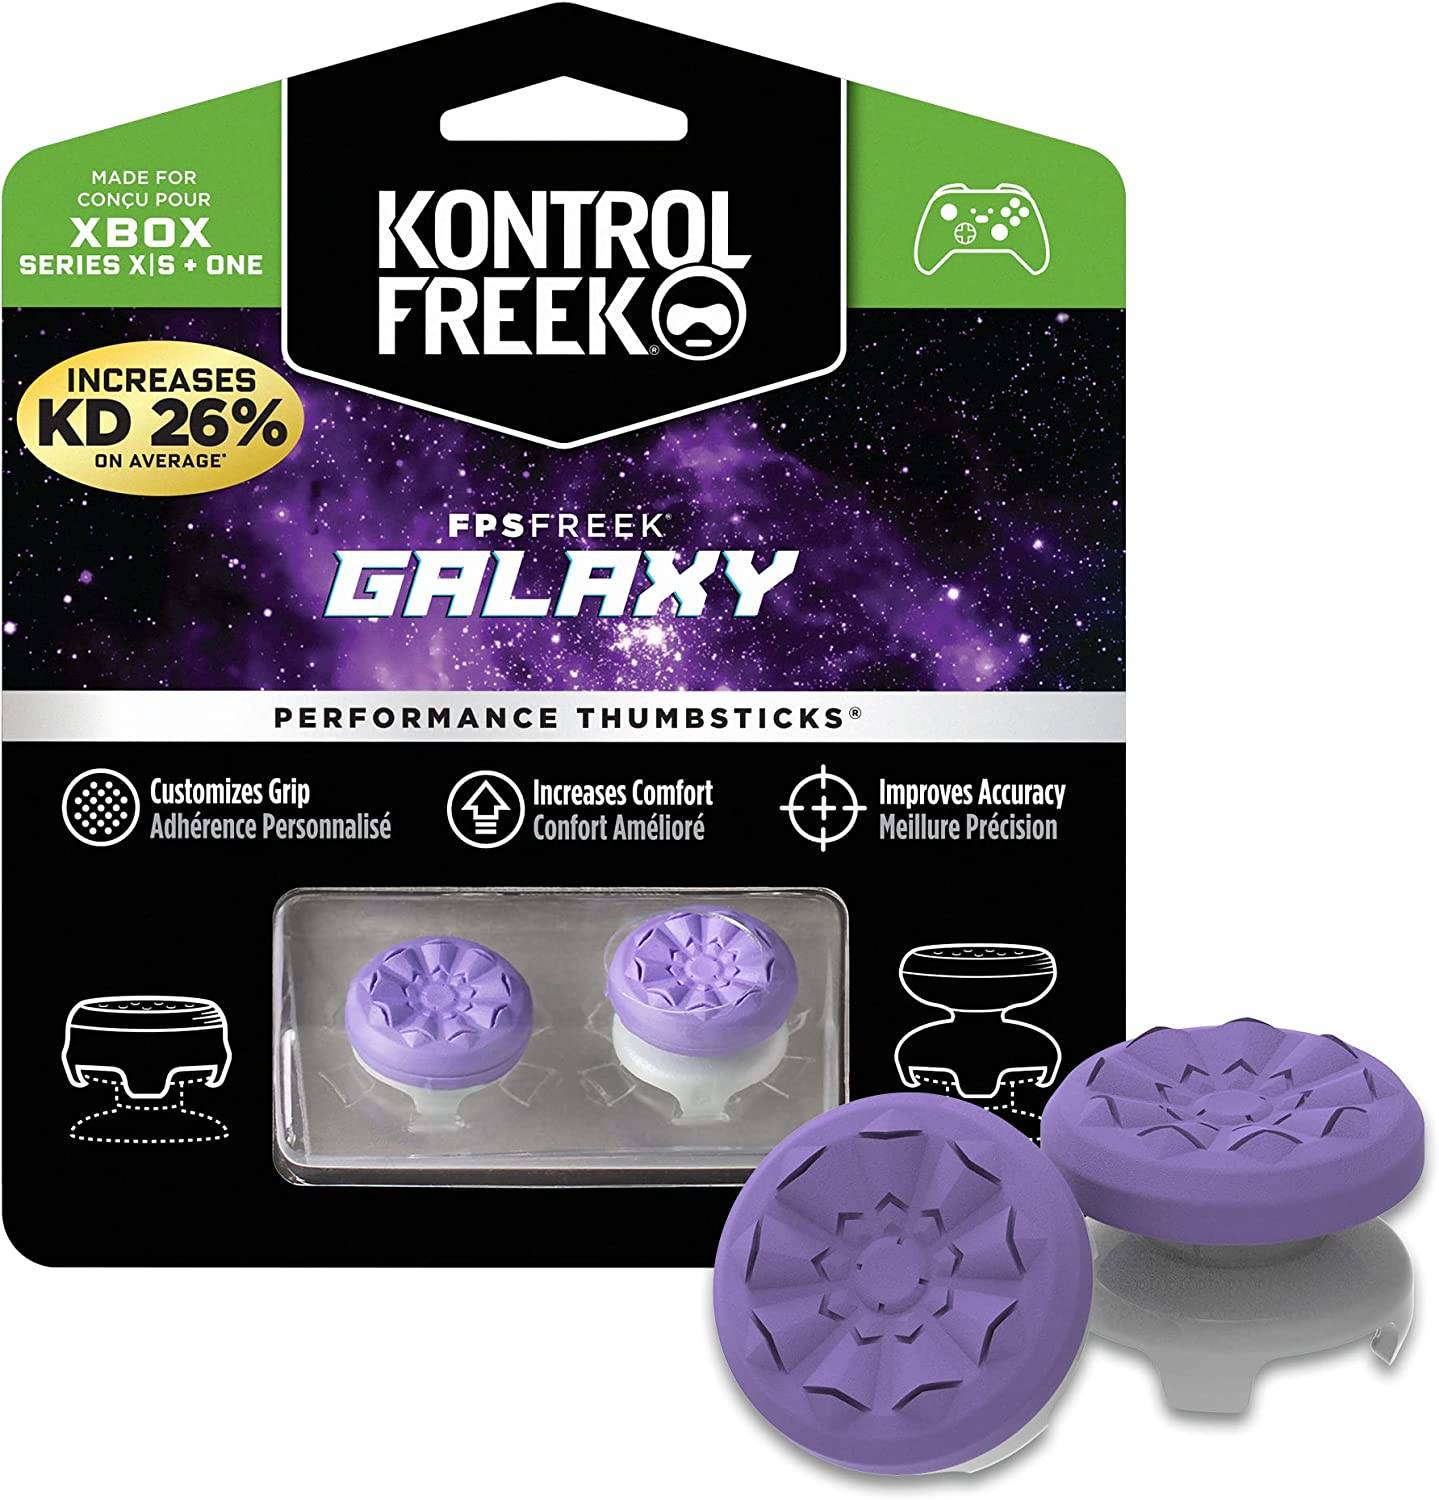 KontrolFreek FPS Freek Galaxy Performance Thumbsticks for Xbox Series X and Xbox  One - Invastor